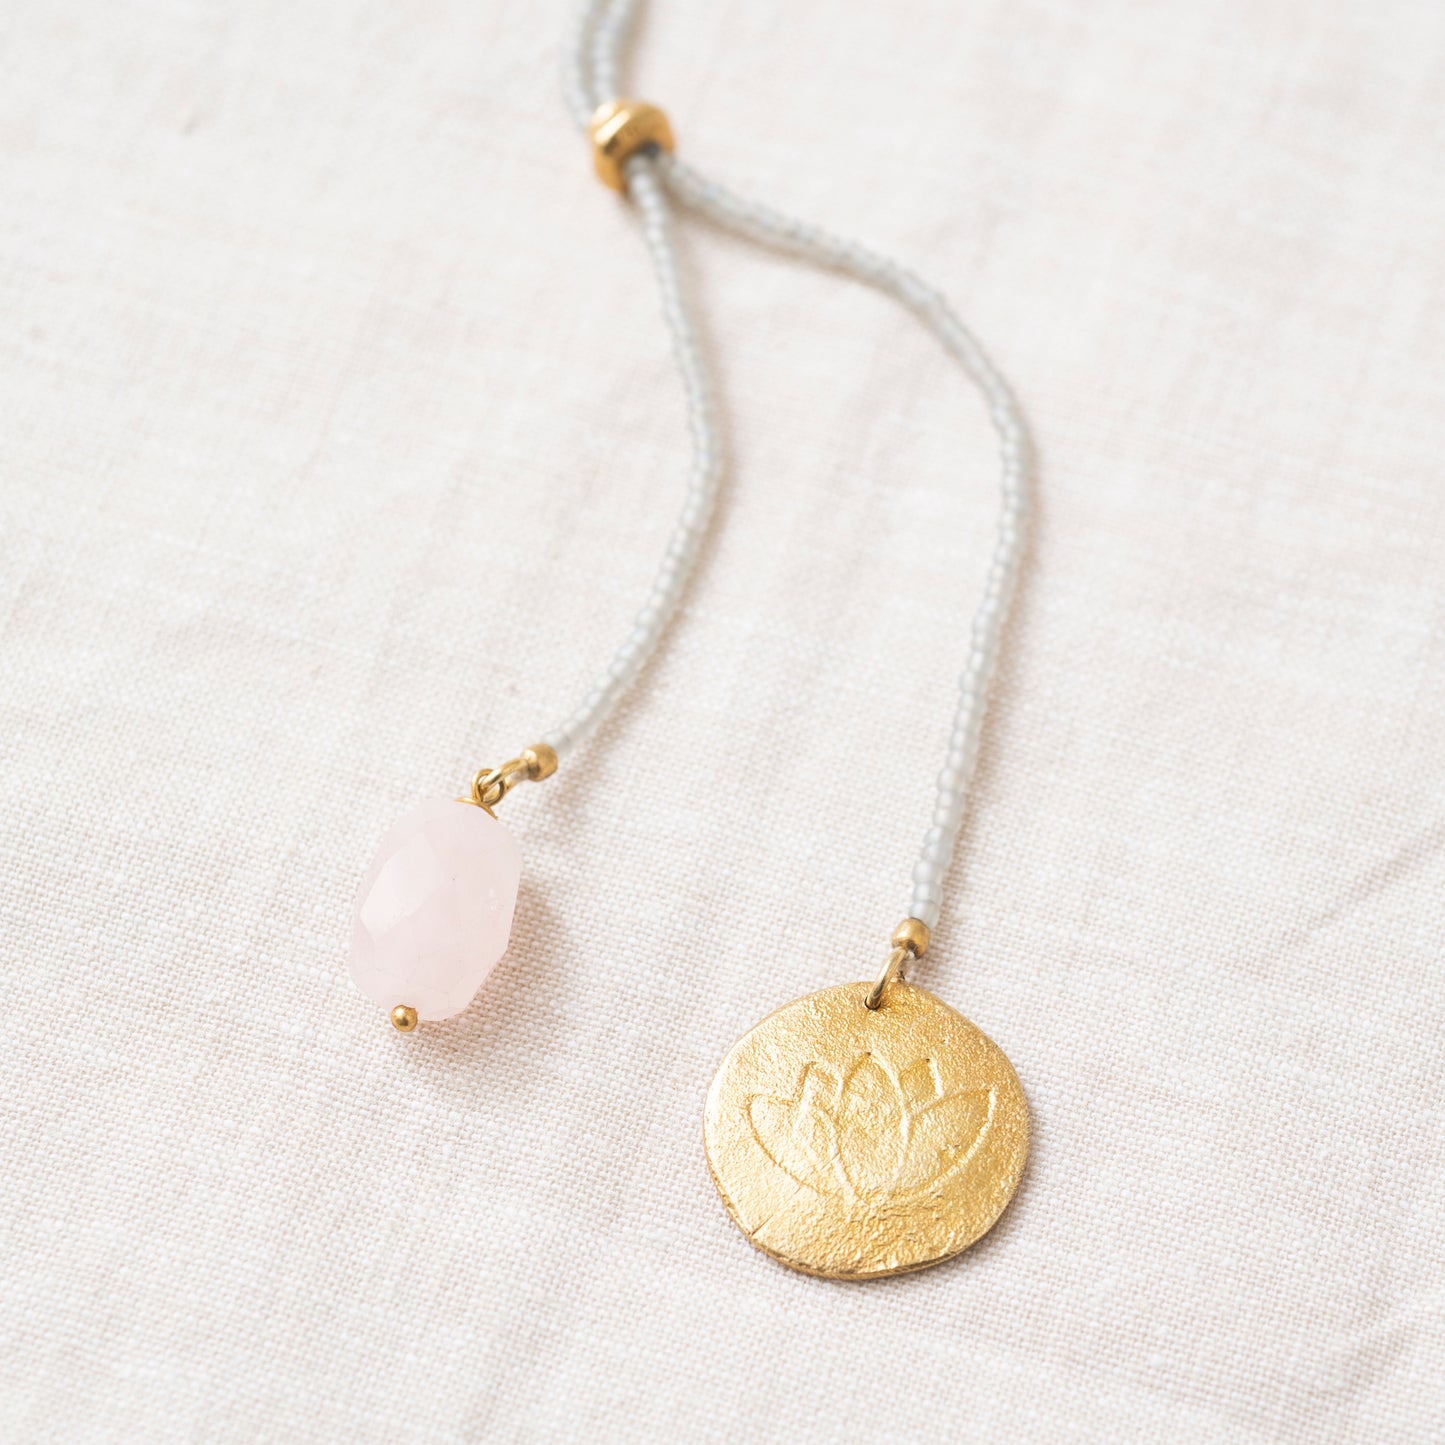 Fairy Long Necklace - Rose Quartz - Gold plated